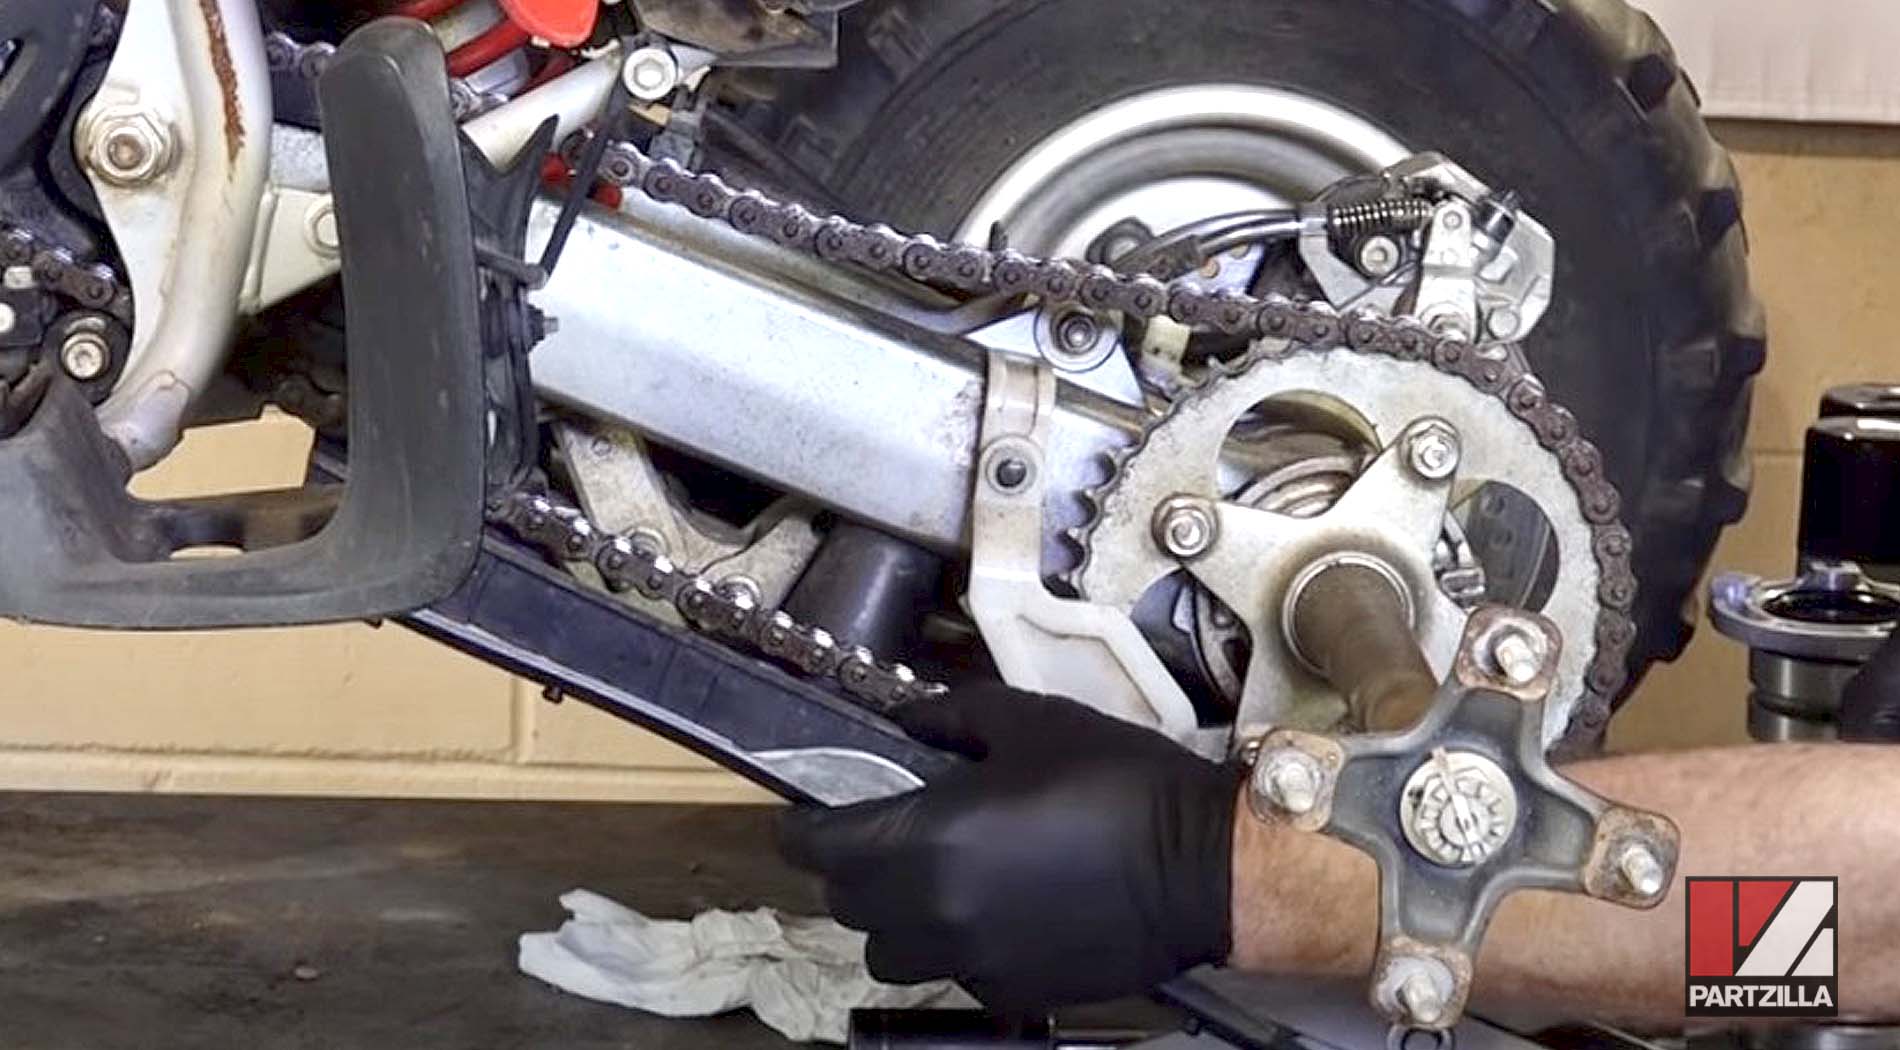 2007 Honda TRX 400 ATV chain adjustment